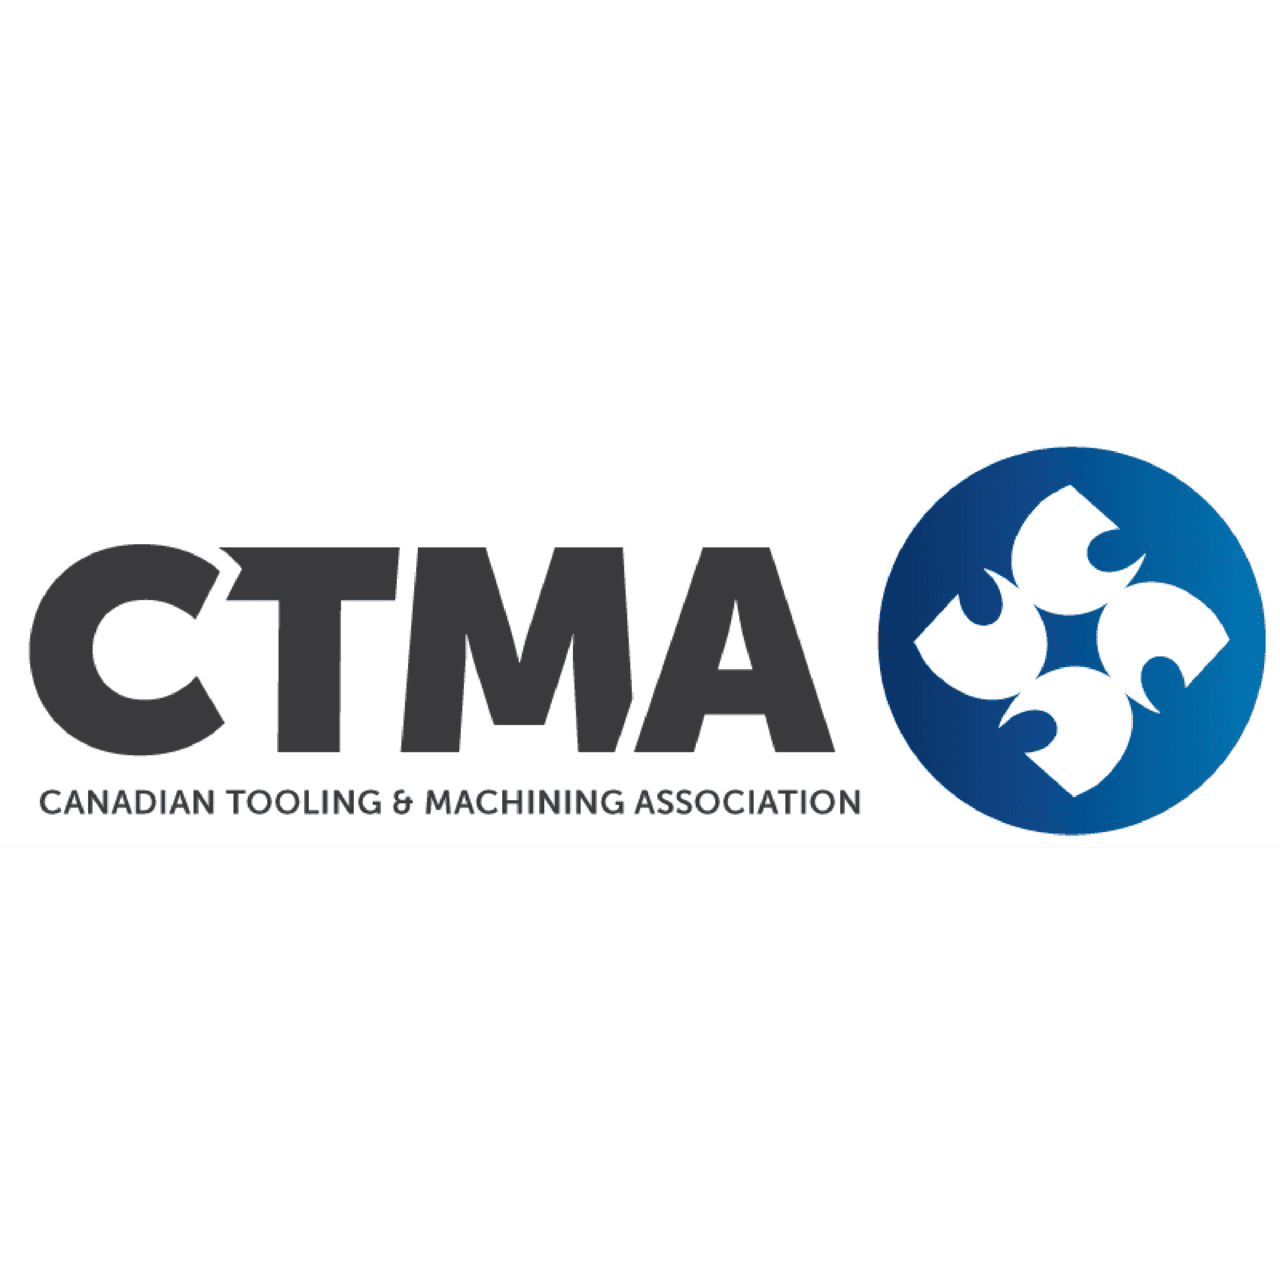 Canadian Tooling & Machining Association (CTMA) logo